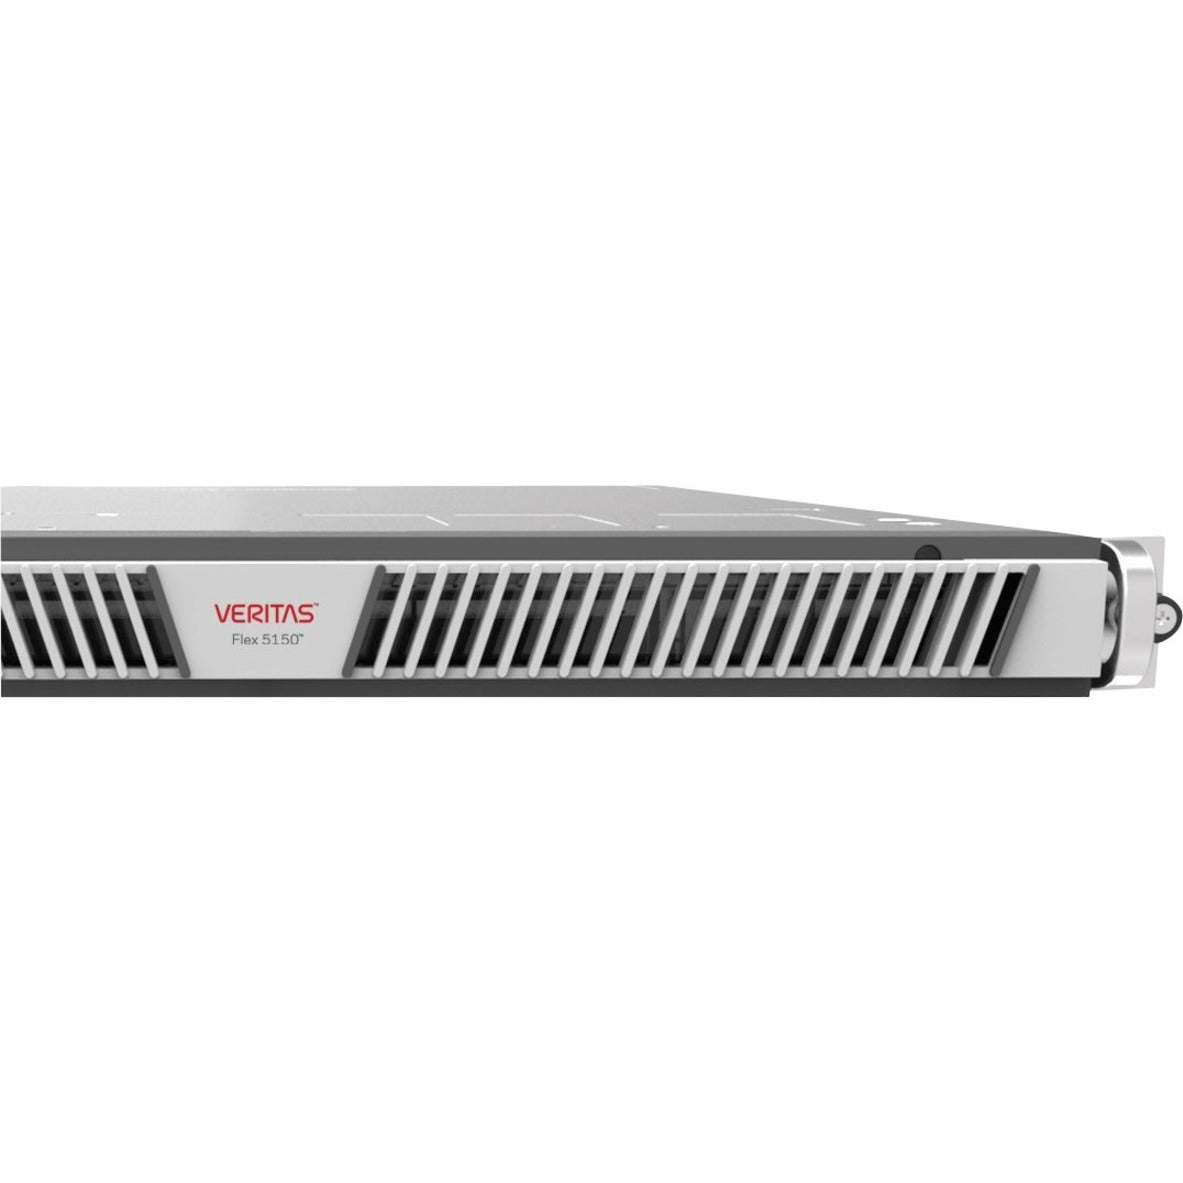 Veritas 26111-M0022 Flex System 5150 NAS Storage System, 15TB Total Hard Drive Capacity Installed, 12Gb/s SAS Controller, 4 Network (RJ-45) Ports, 2 Power Supplies Installed